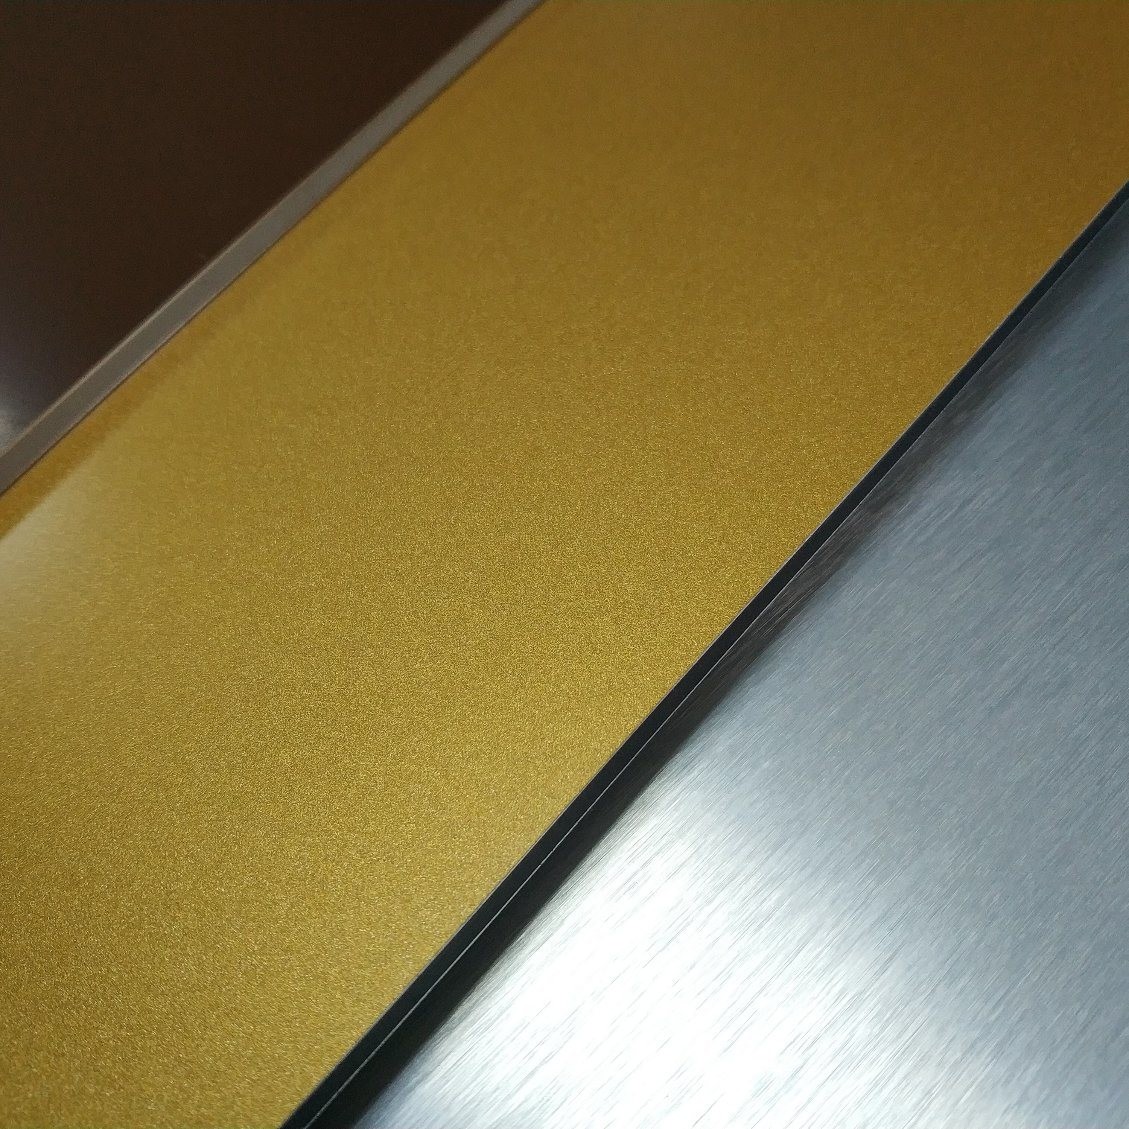 Quality Wood Color Building Decoration Material Aluminum Composite Board for sale